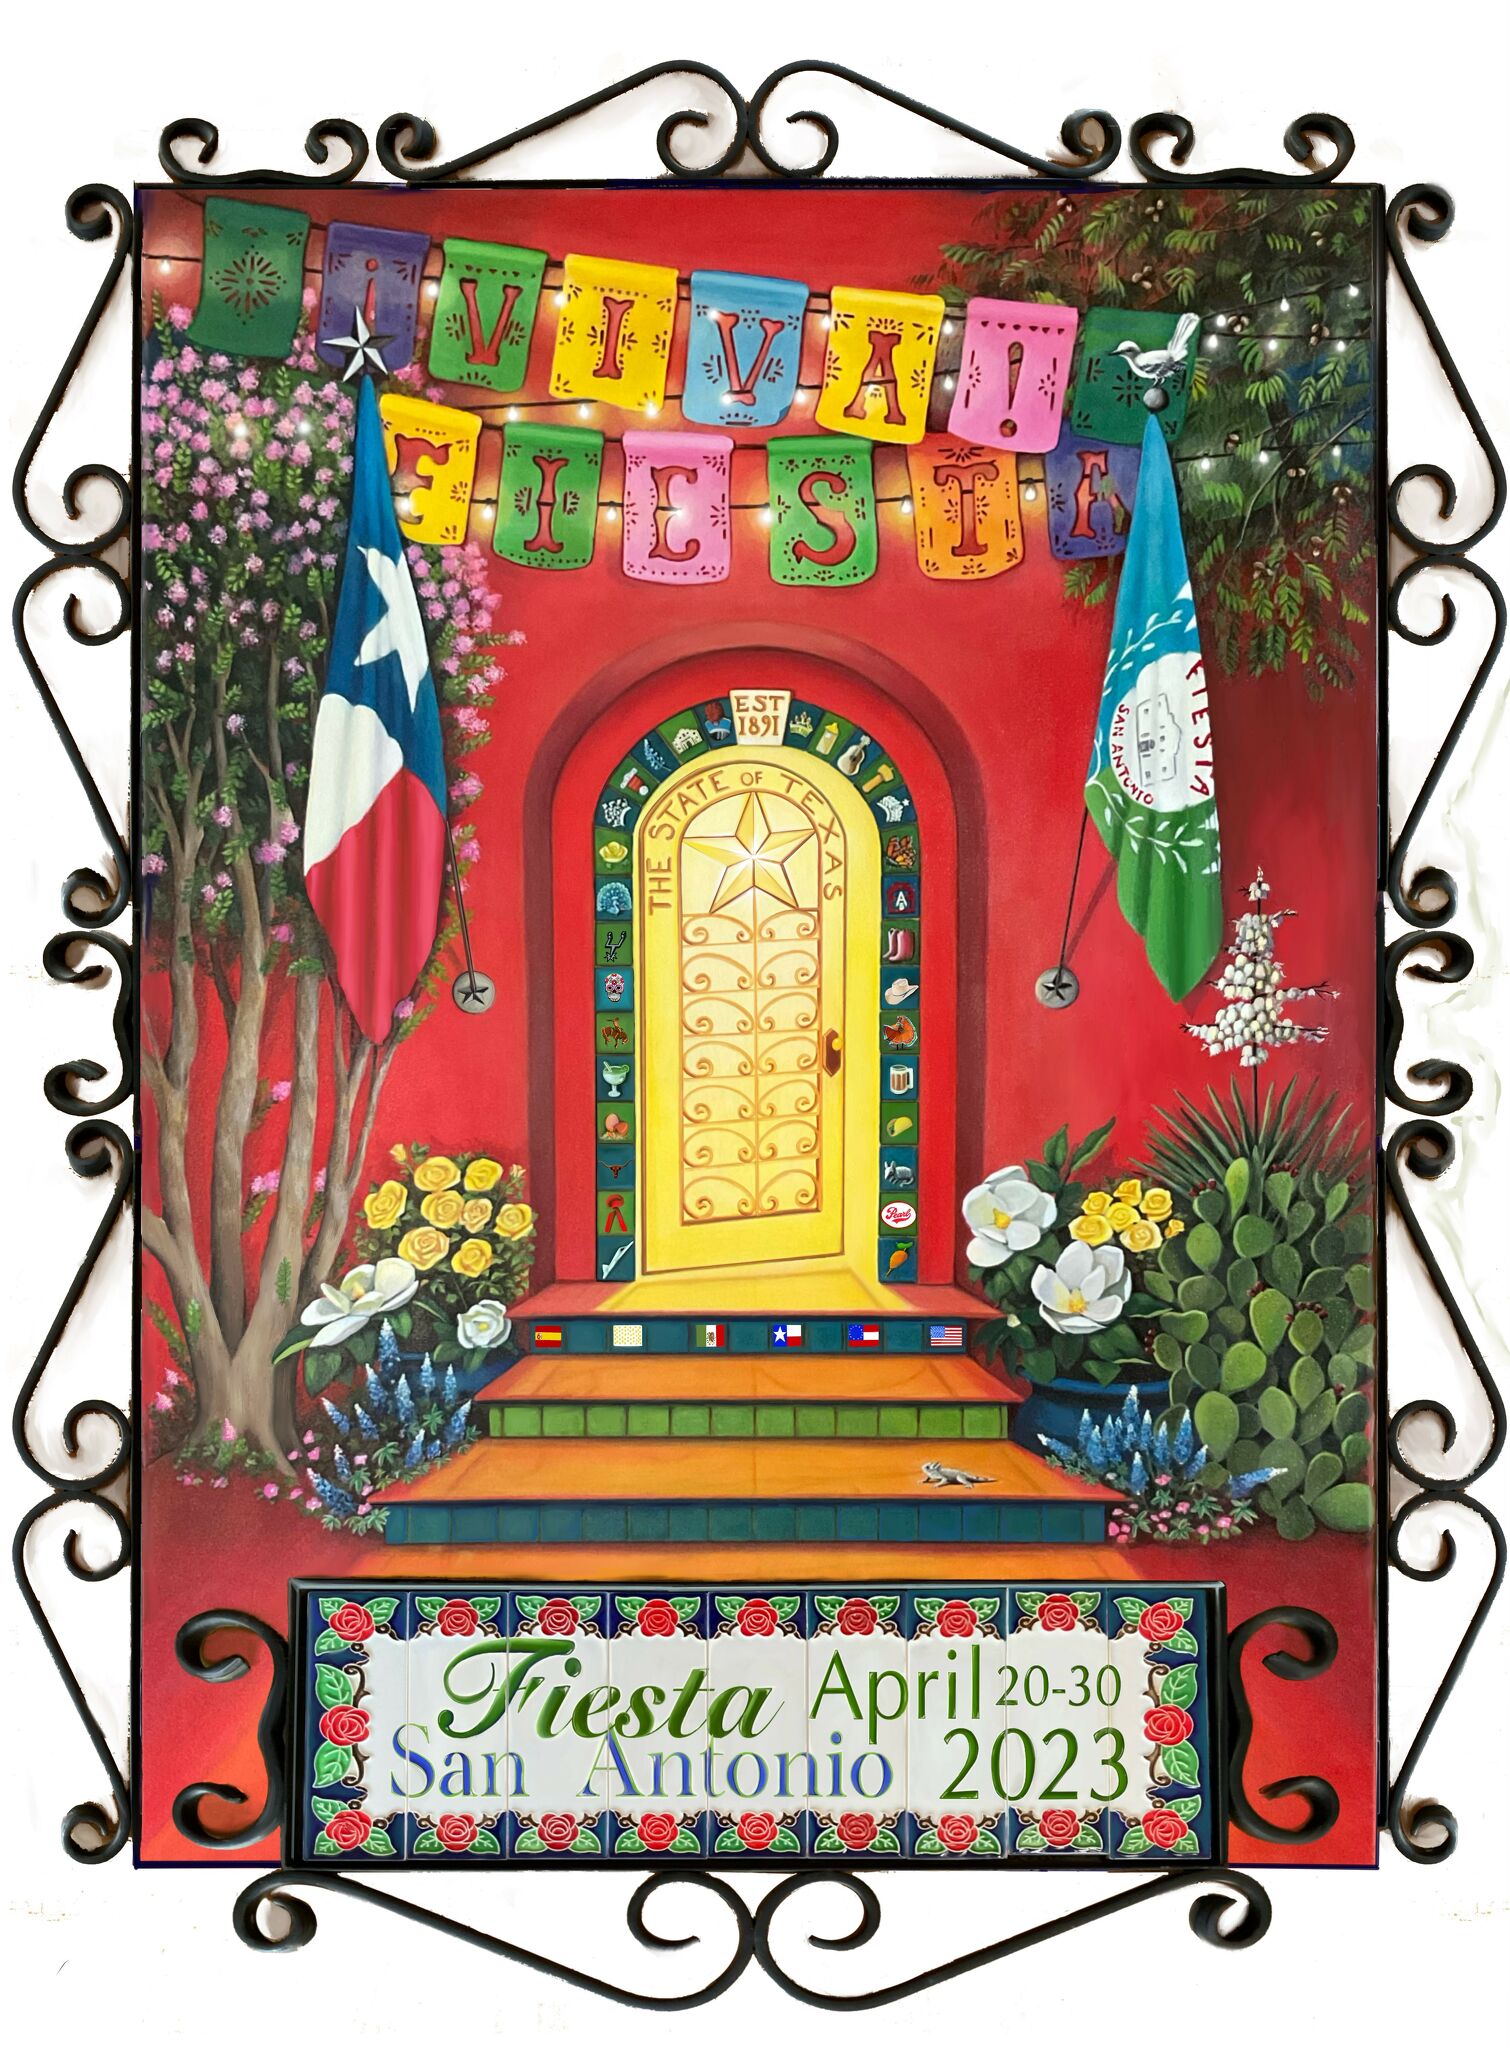 2023 Fiesta San Antonio official poster unveiled